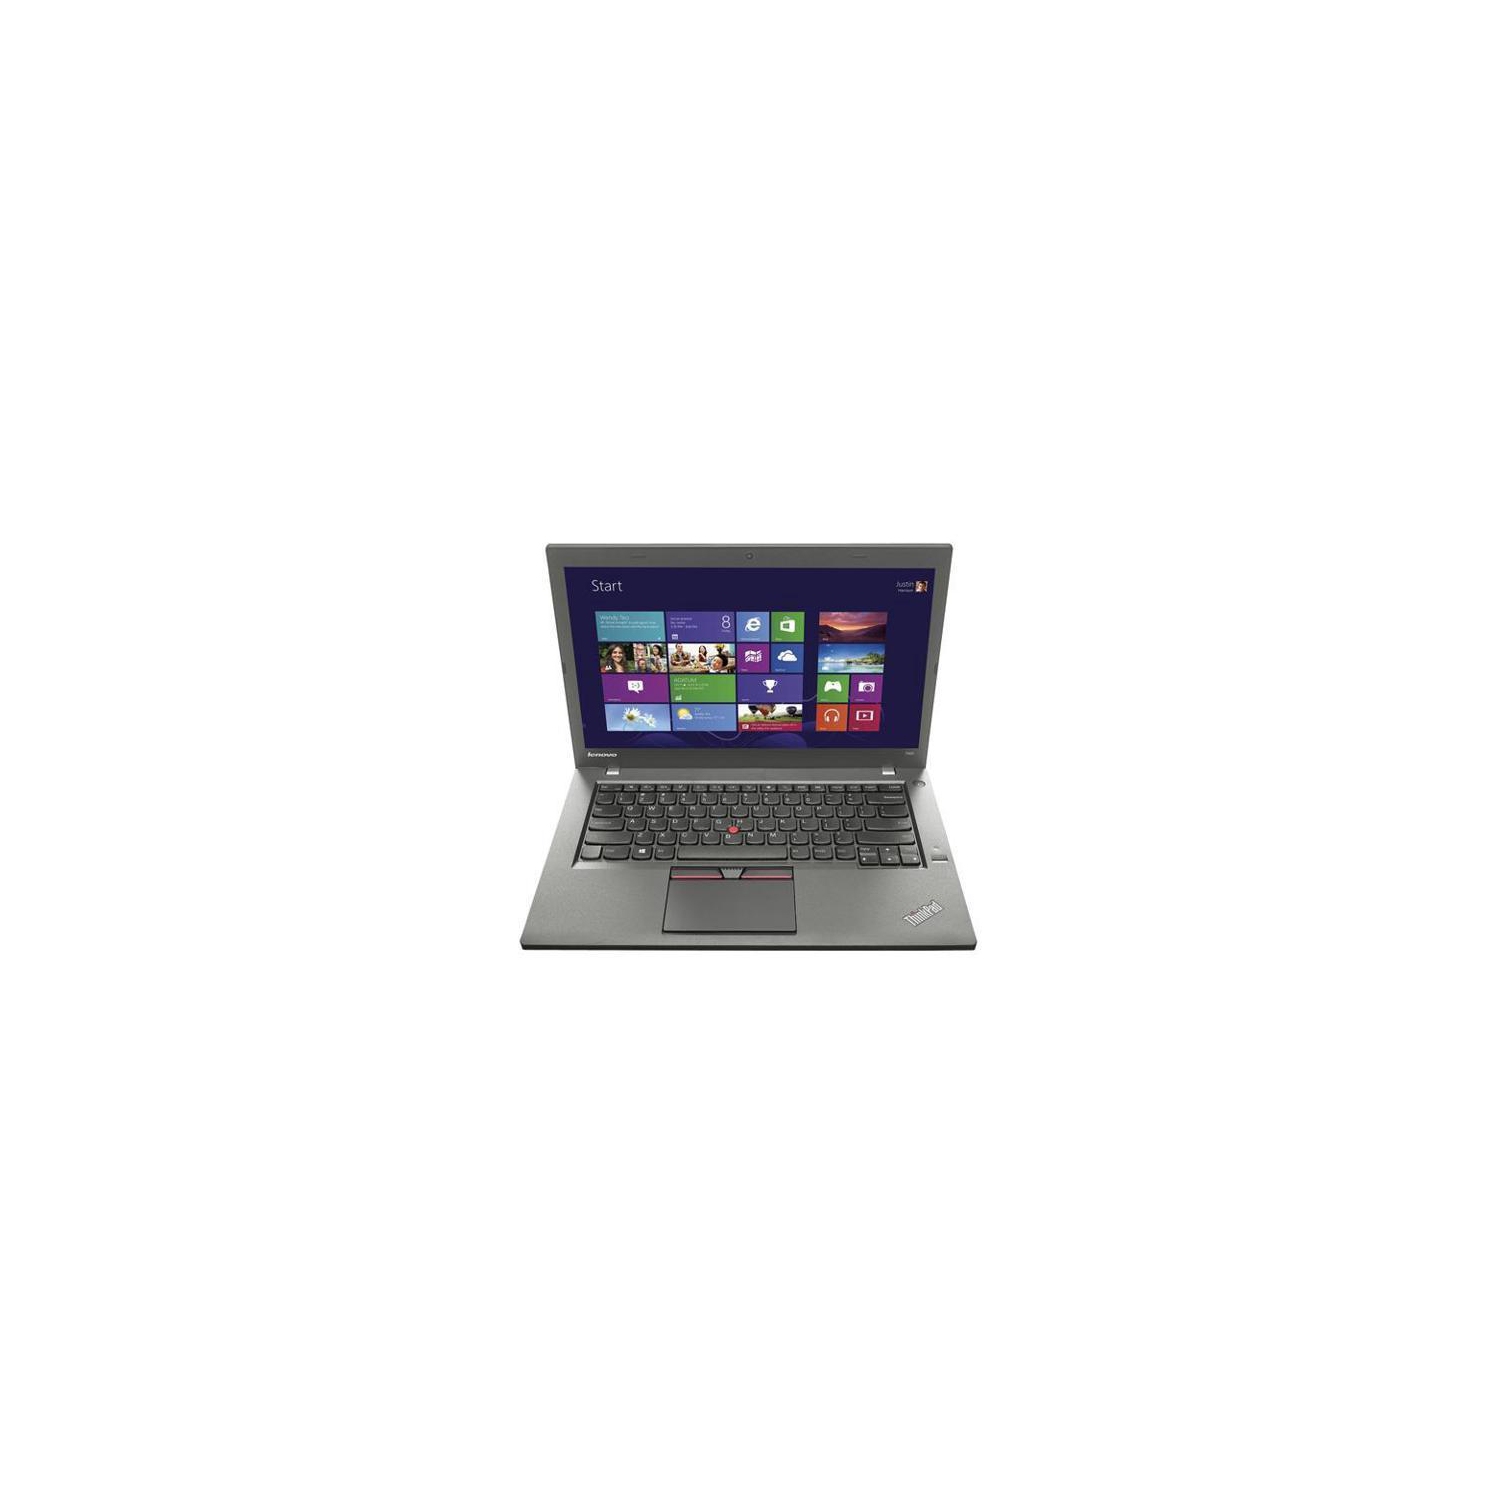 Lenovo ThinkPad T450 14" Laptop - Intel Core i5-5300U, 8GB RAM, 256GB SSD, WiFi - Windows 10 Professional - Refurbished